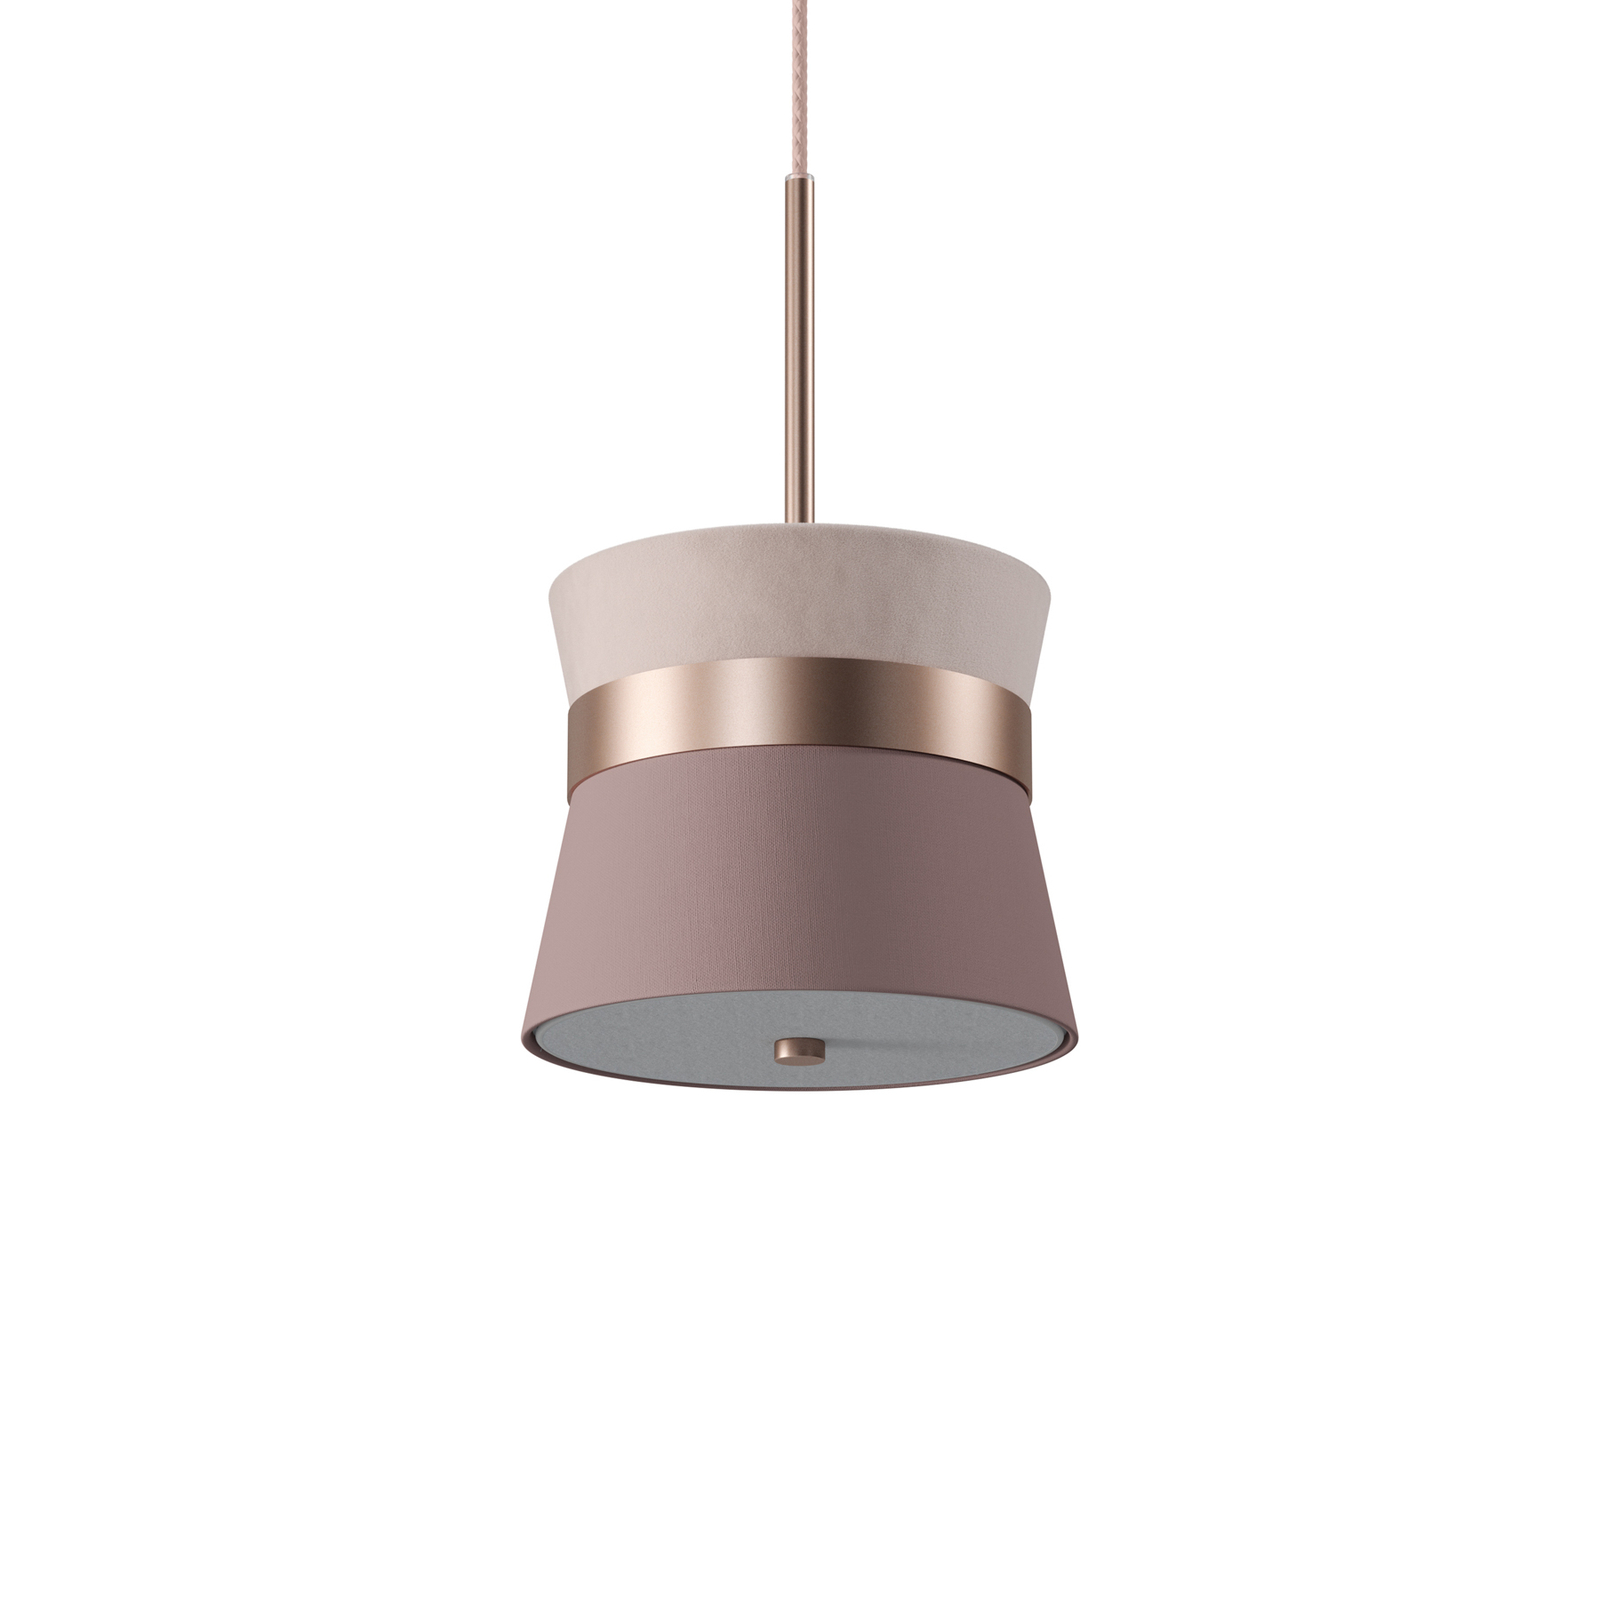 Lampa wisząca Easy Light Caramelo S, Ø 22 cm, Wolke